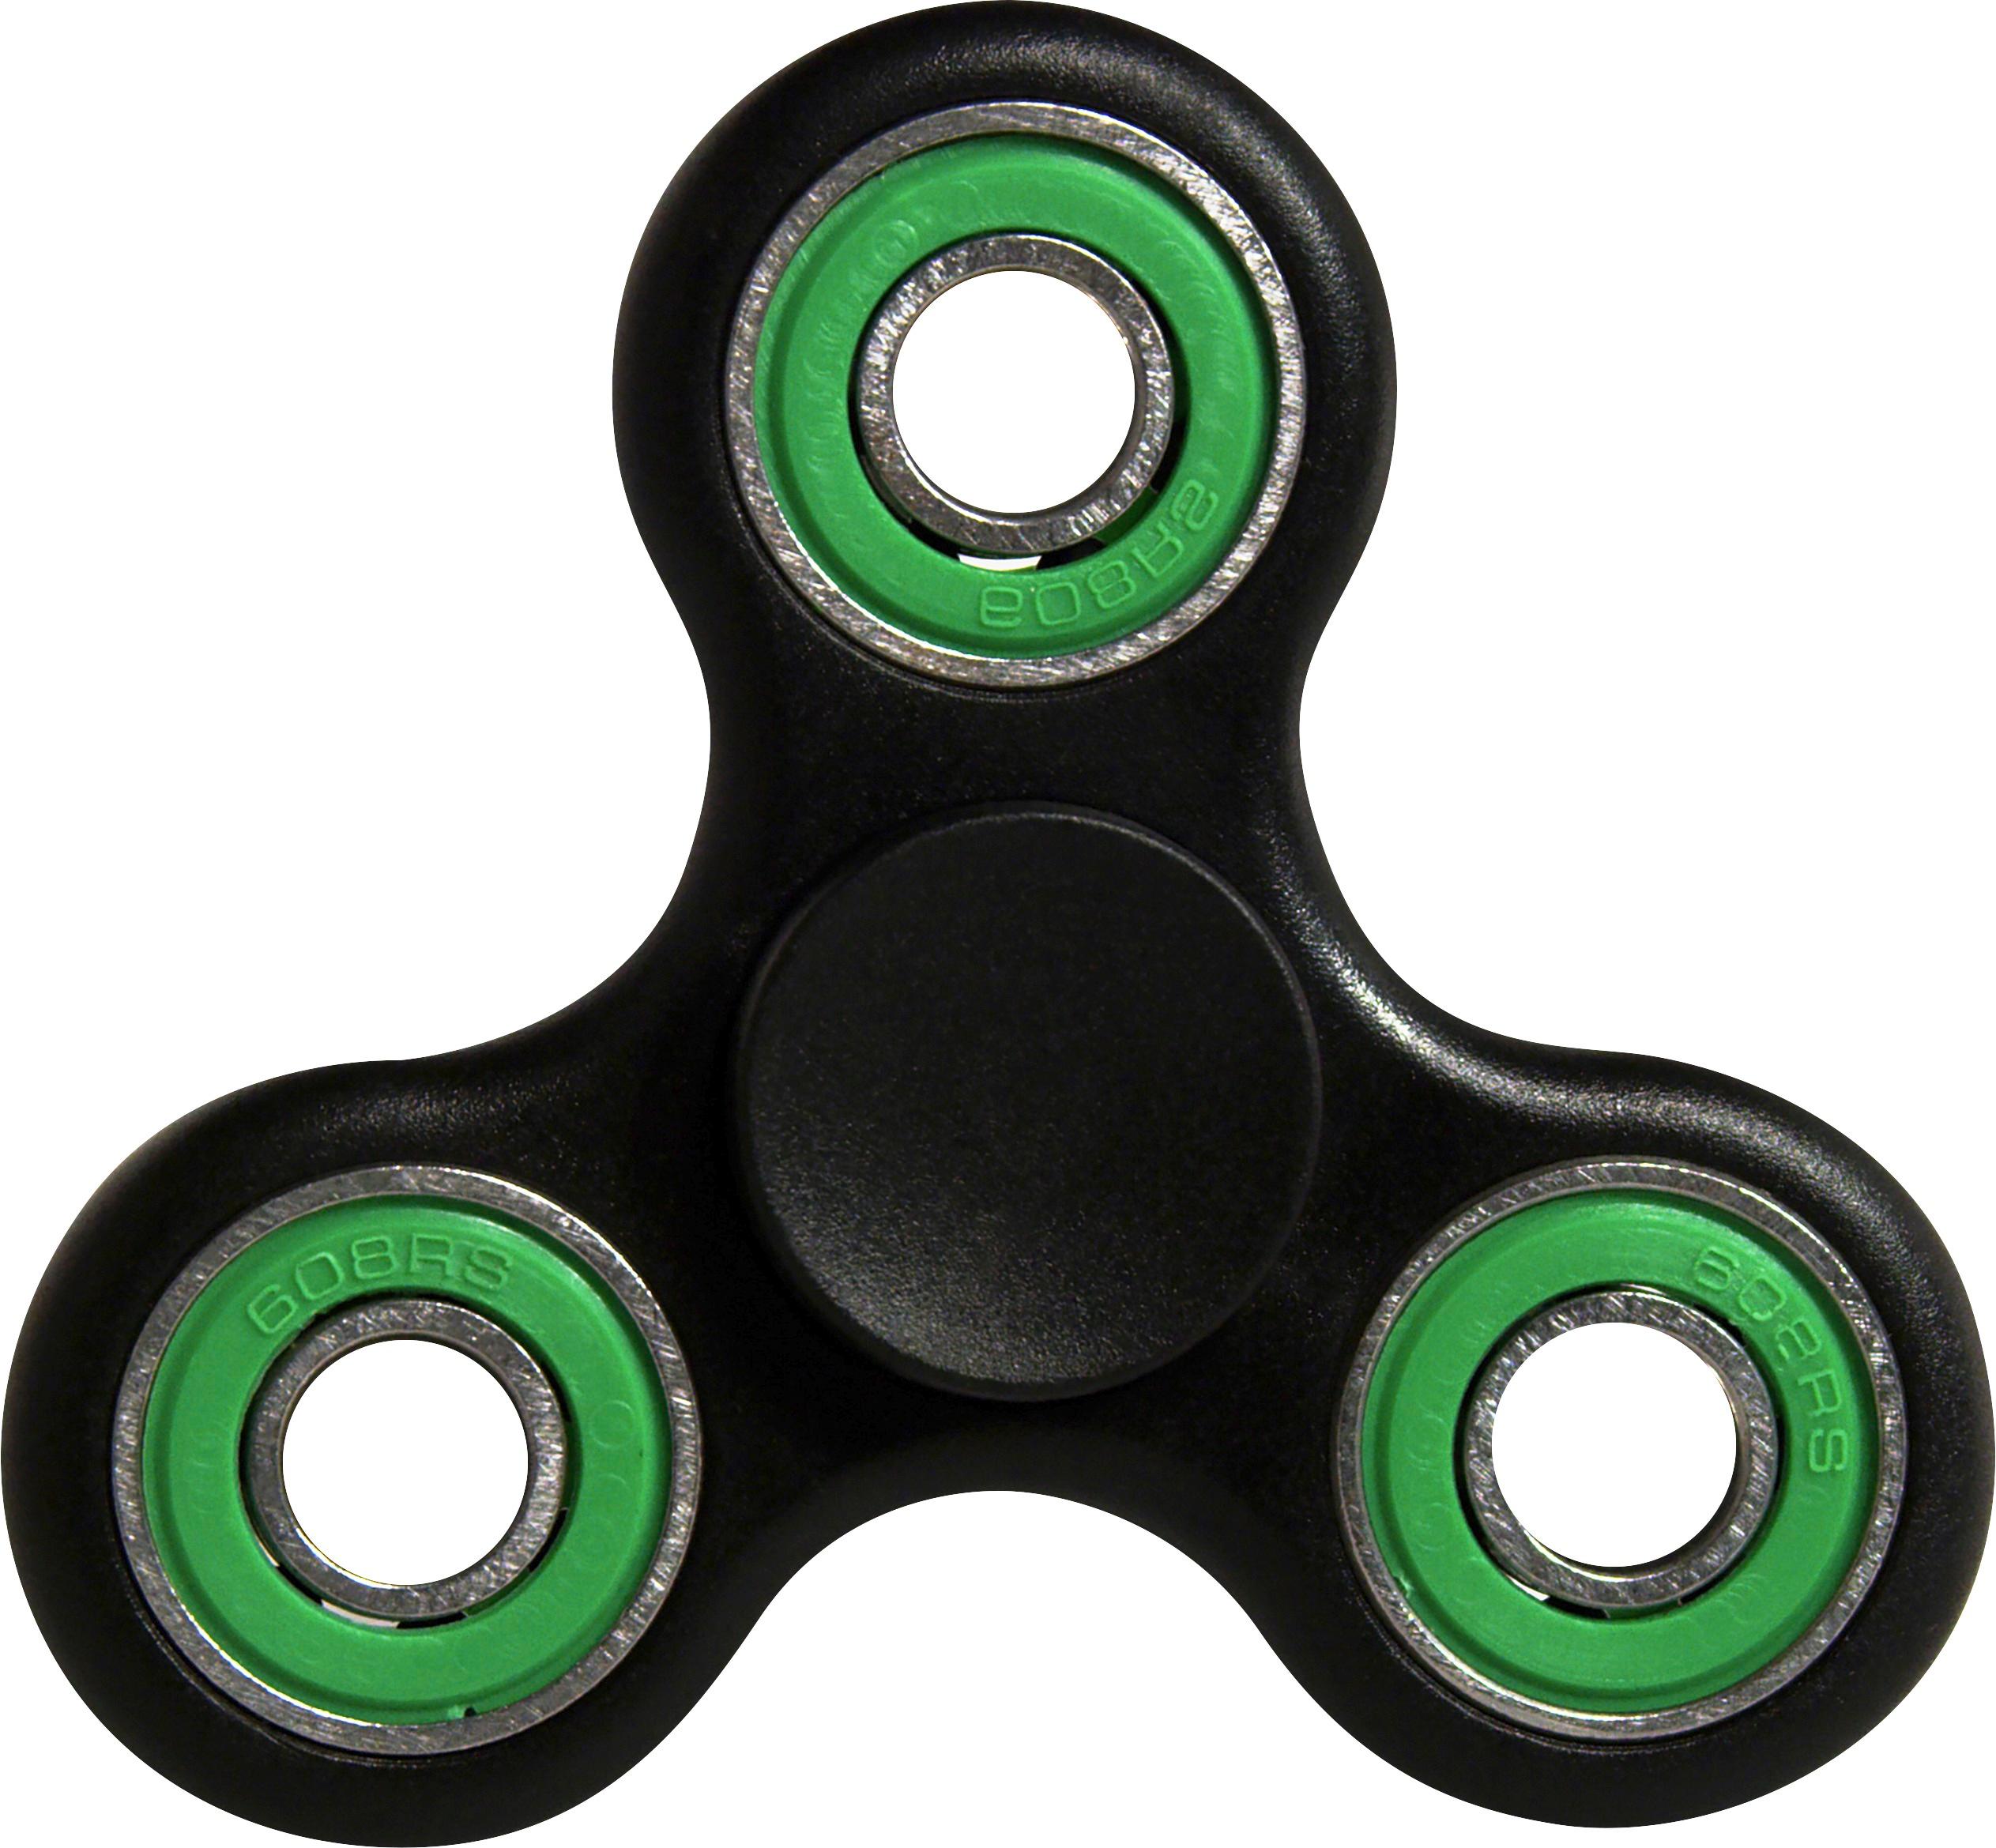 neon green + black Plastic Tri Fidget Spinner Handheld Toy